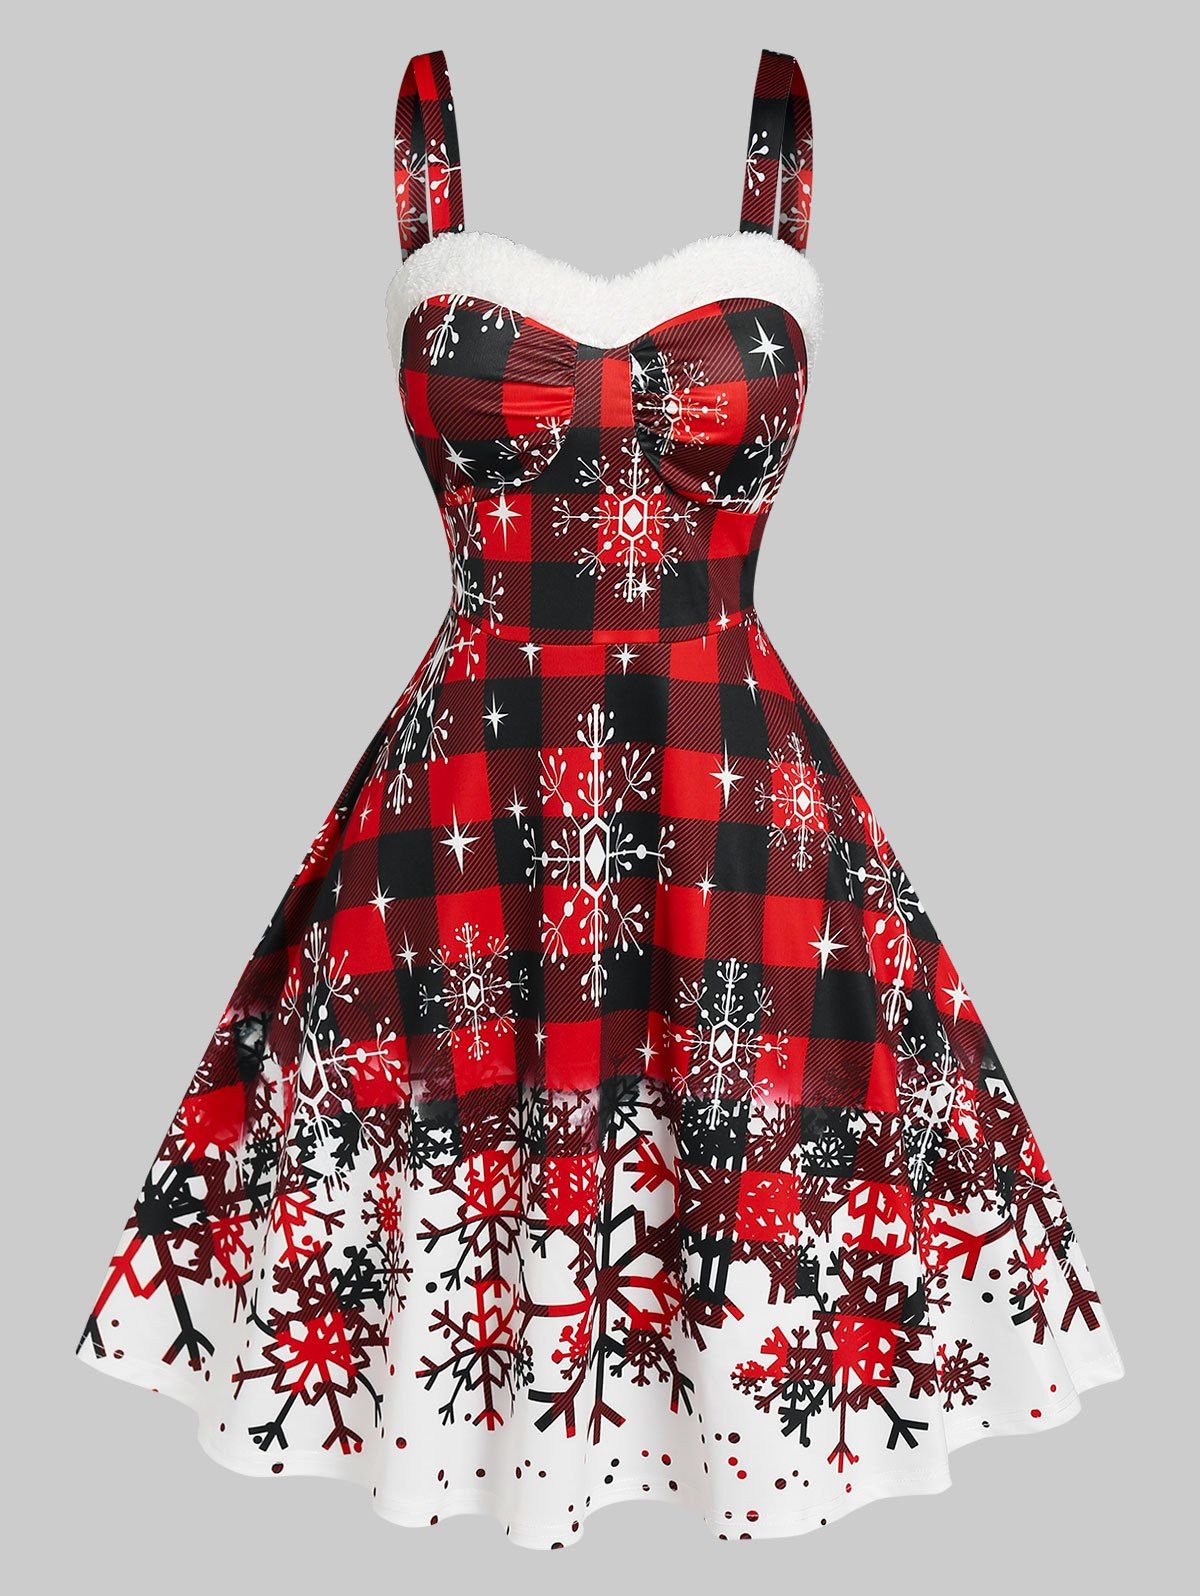 Christmas Party Dress Plaid Snowflake Print Sleeveless Dress - RED XXXL